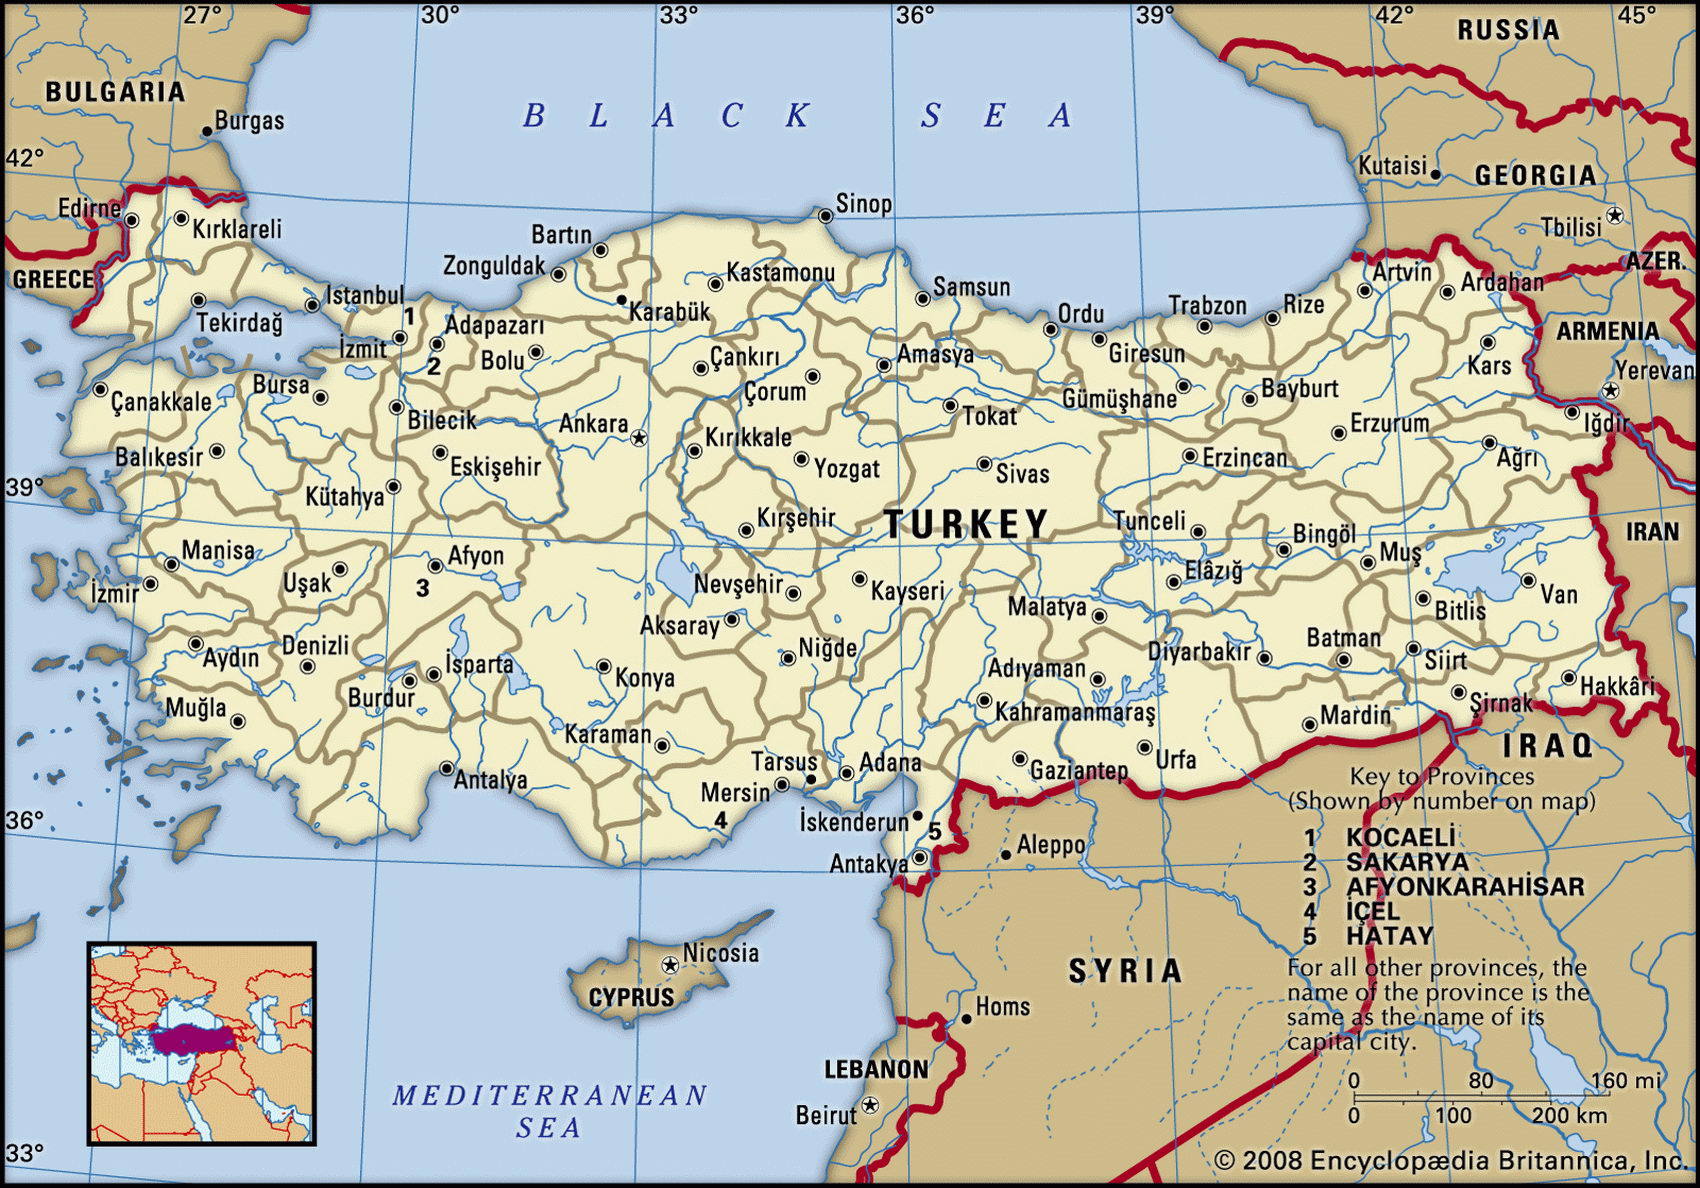 Карта мира на турецком языке